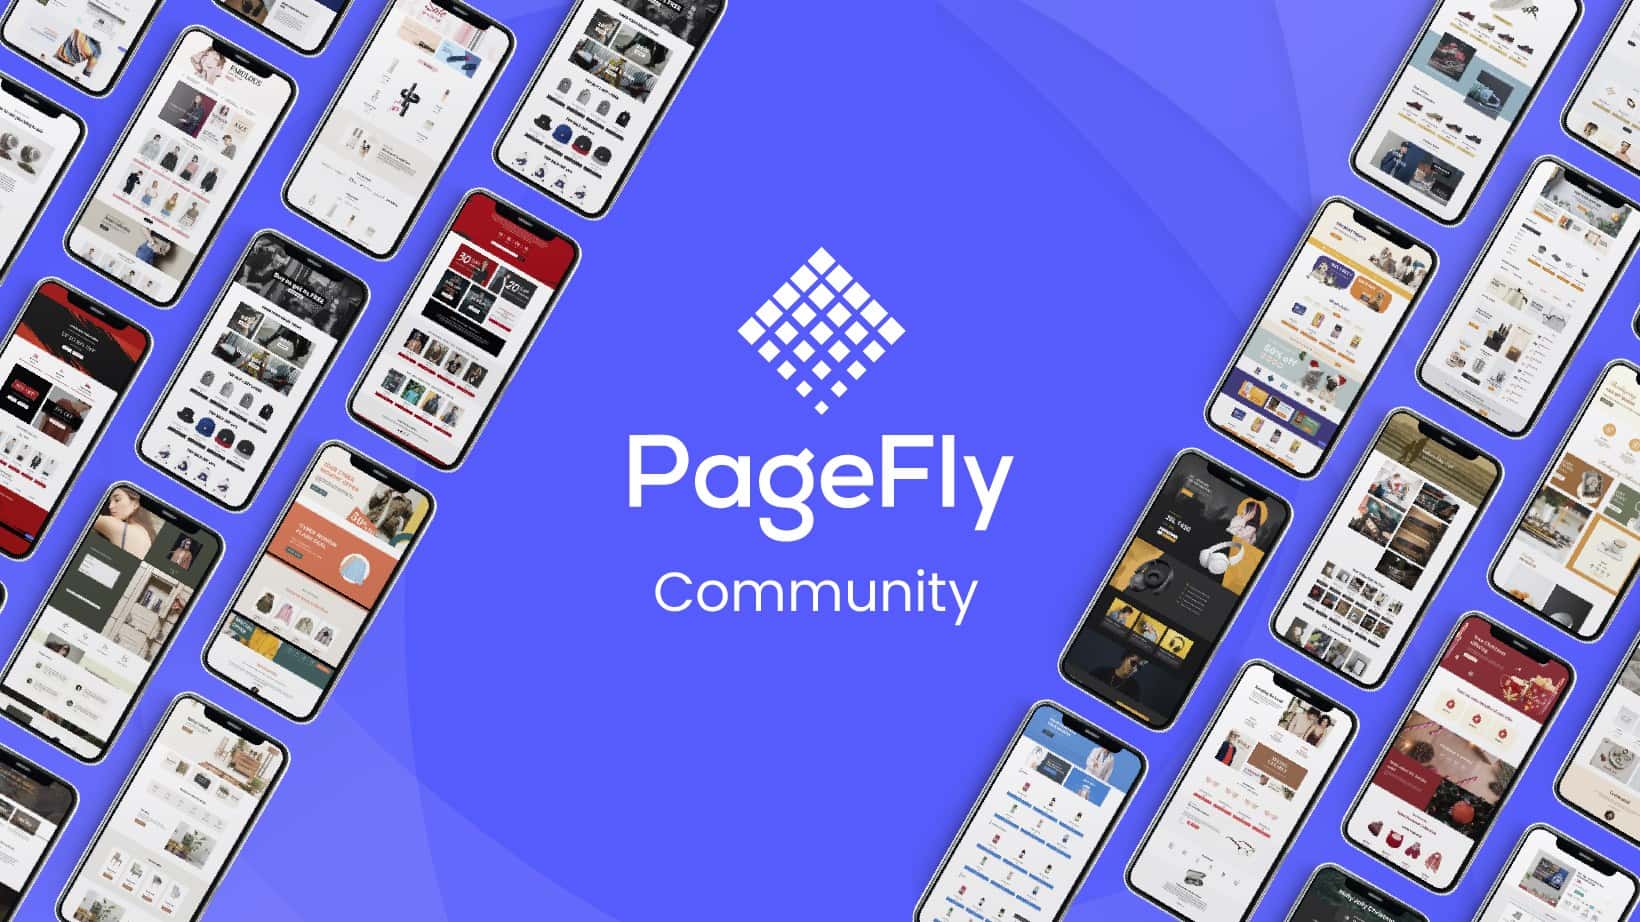 PageFly community